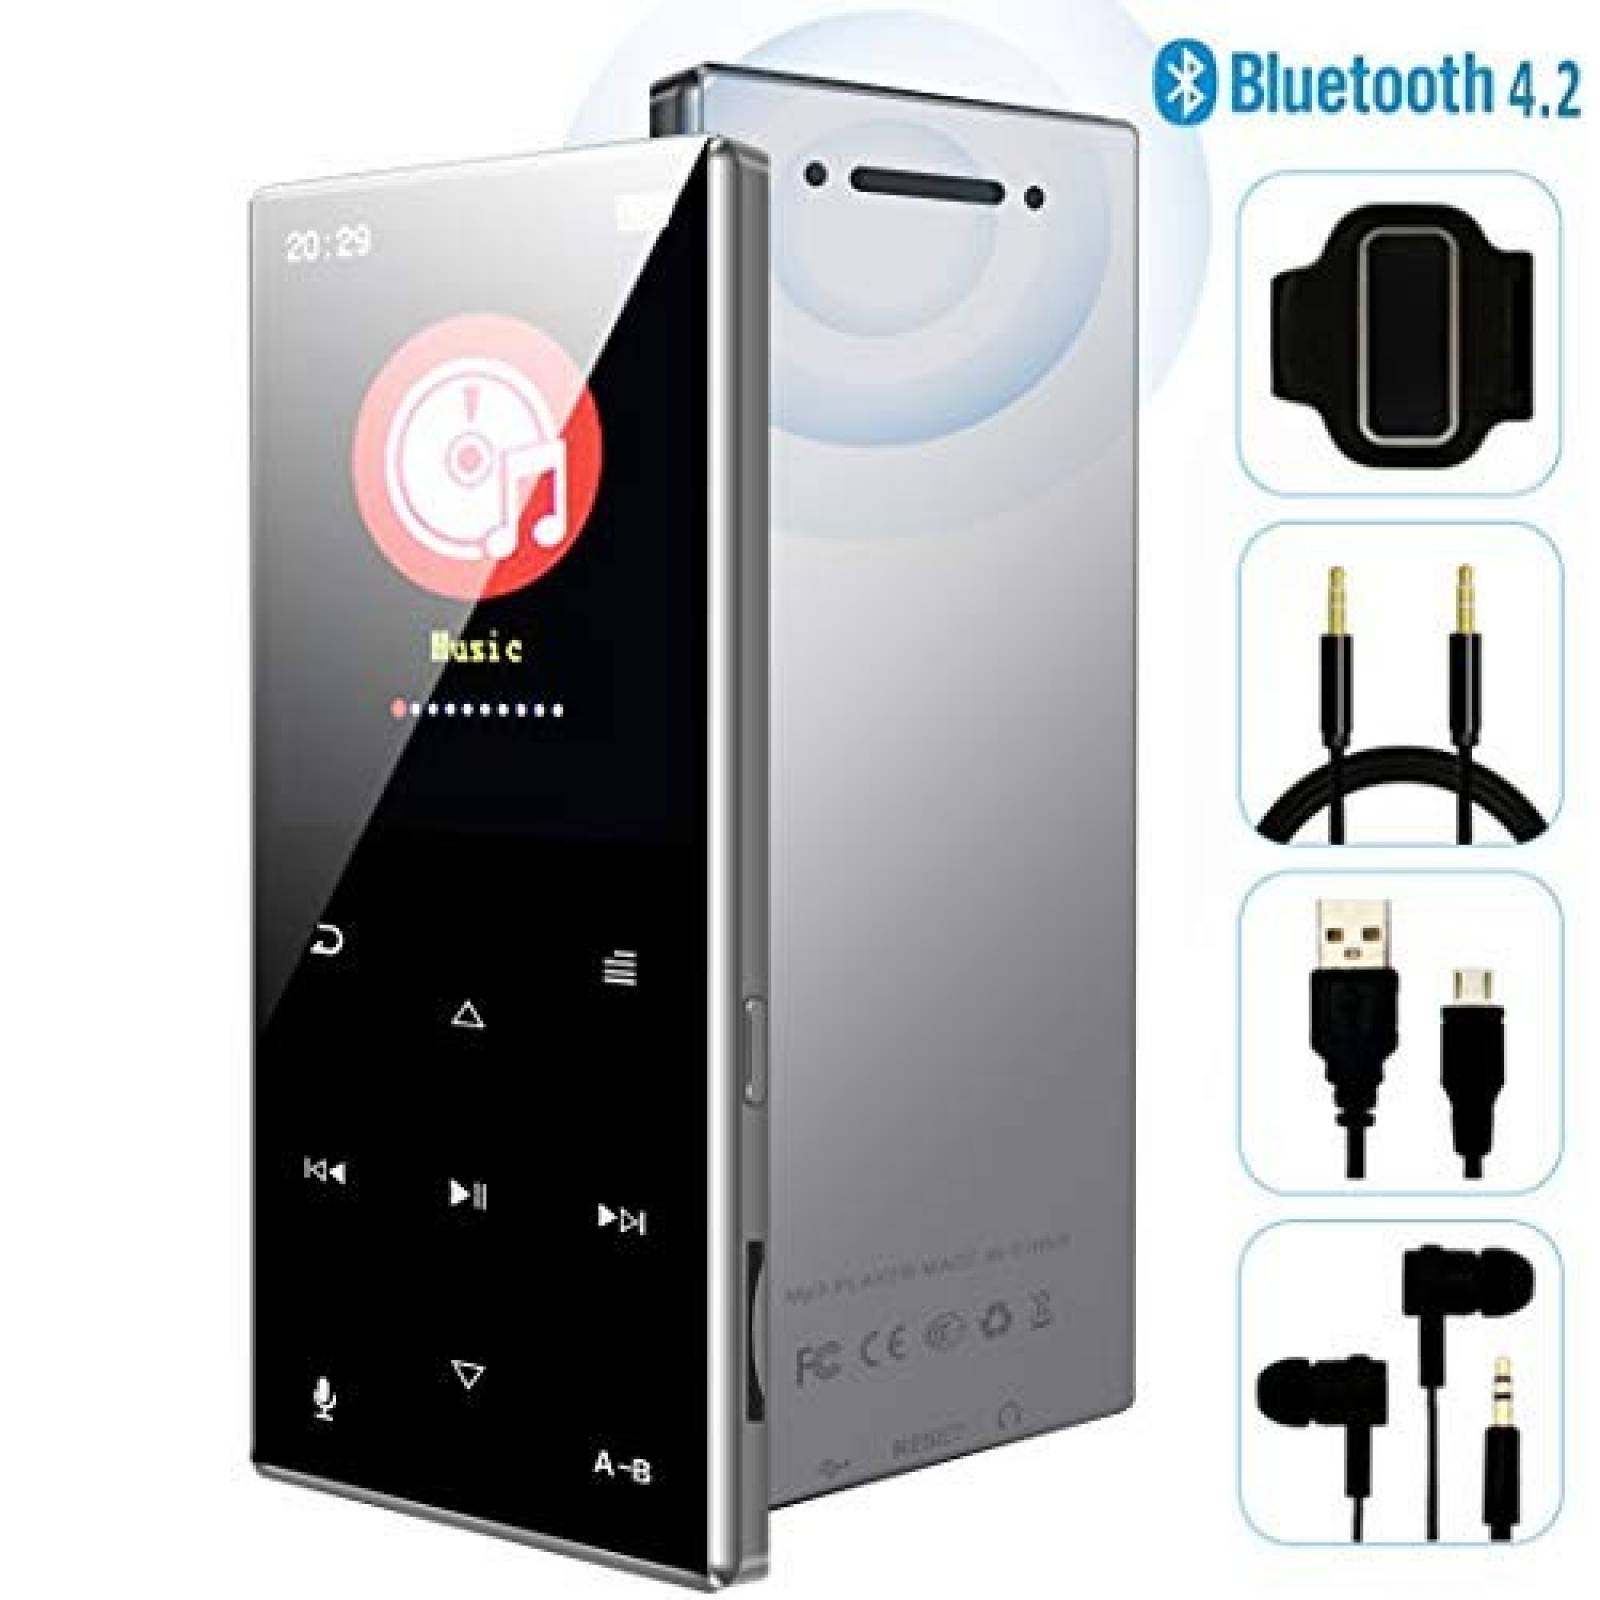 Reproductor MP3 HonTaseng Bluetooth 4.2 con Radio FM -Negro